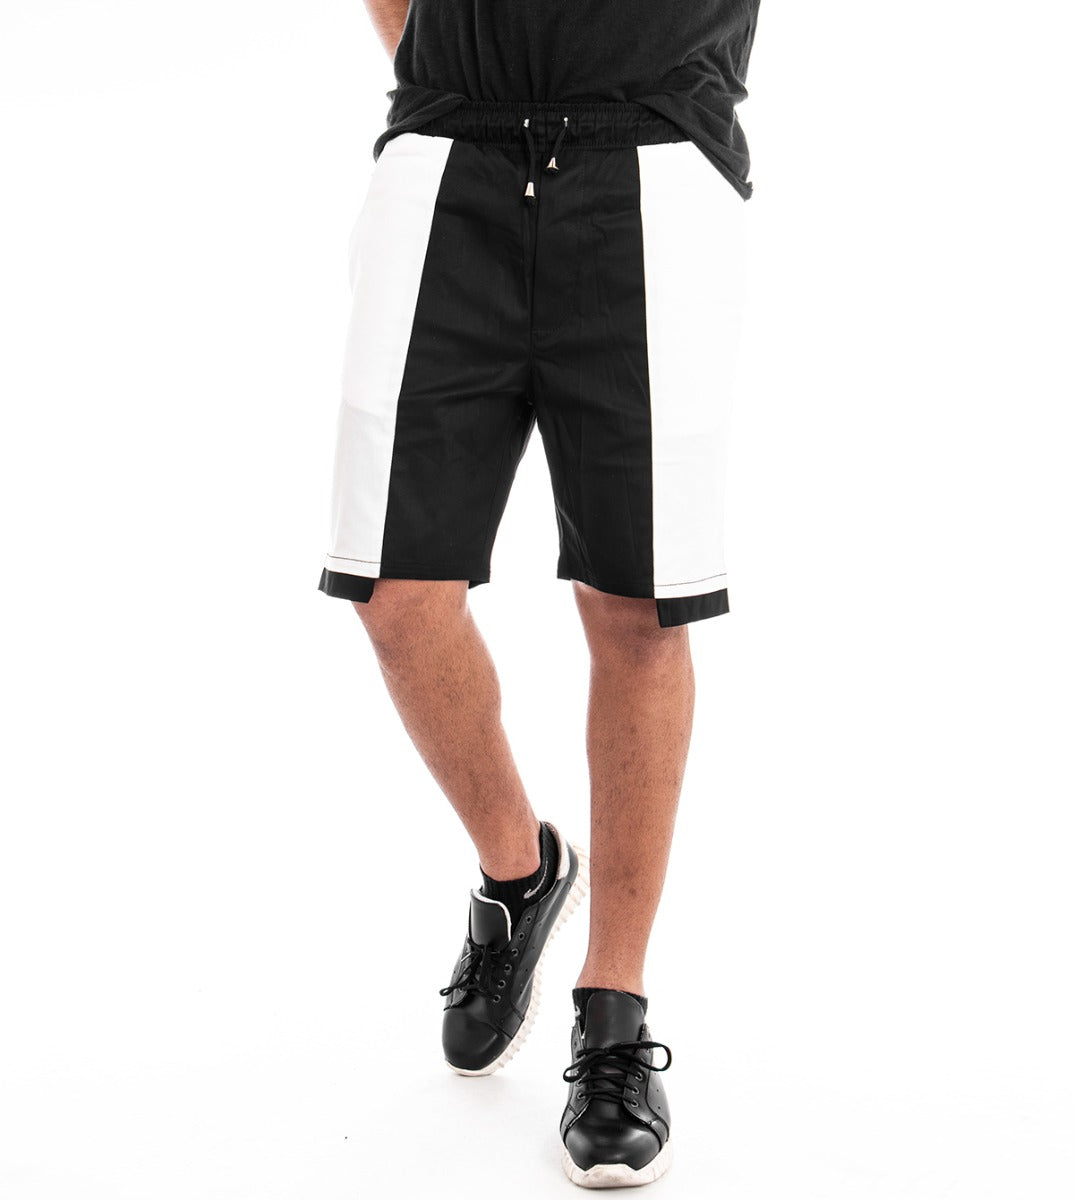 Men's Short Elastic Bermuda Shorts Two-Tone Black GIOSAL-PC1280A